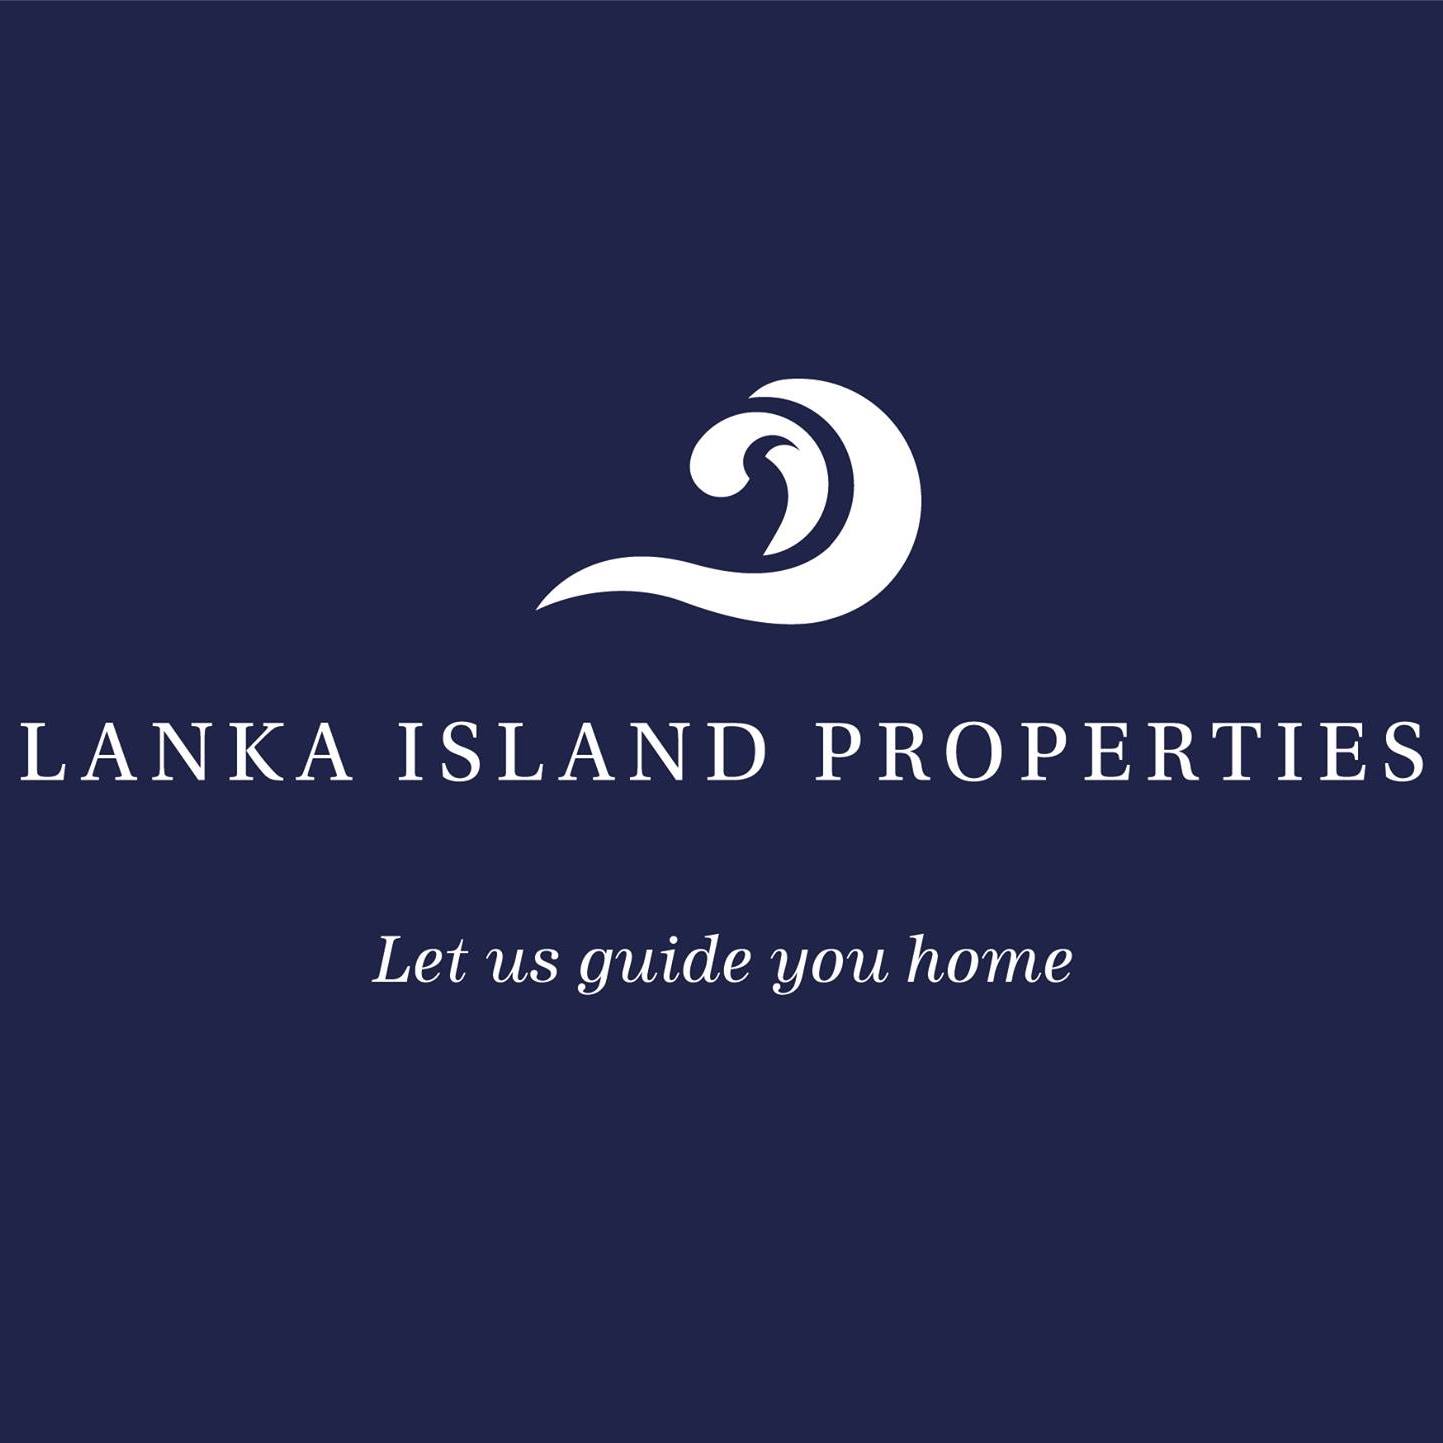 Lanka Island Properties